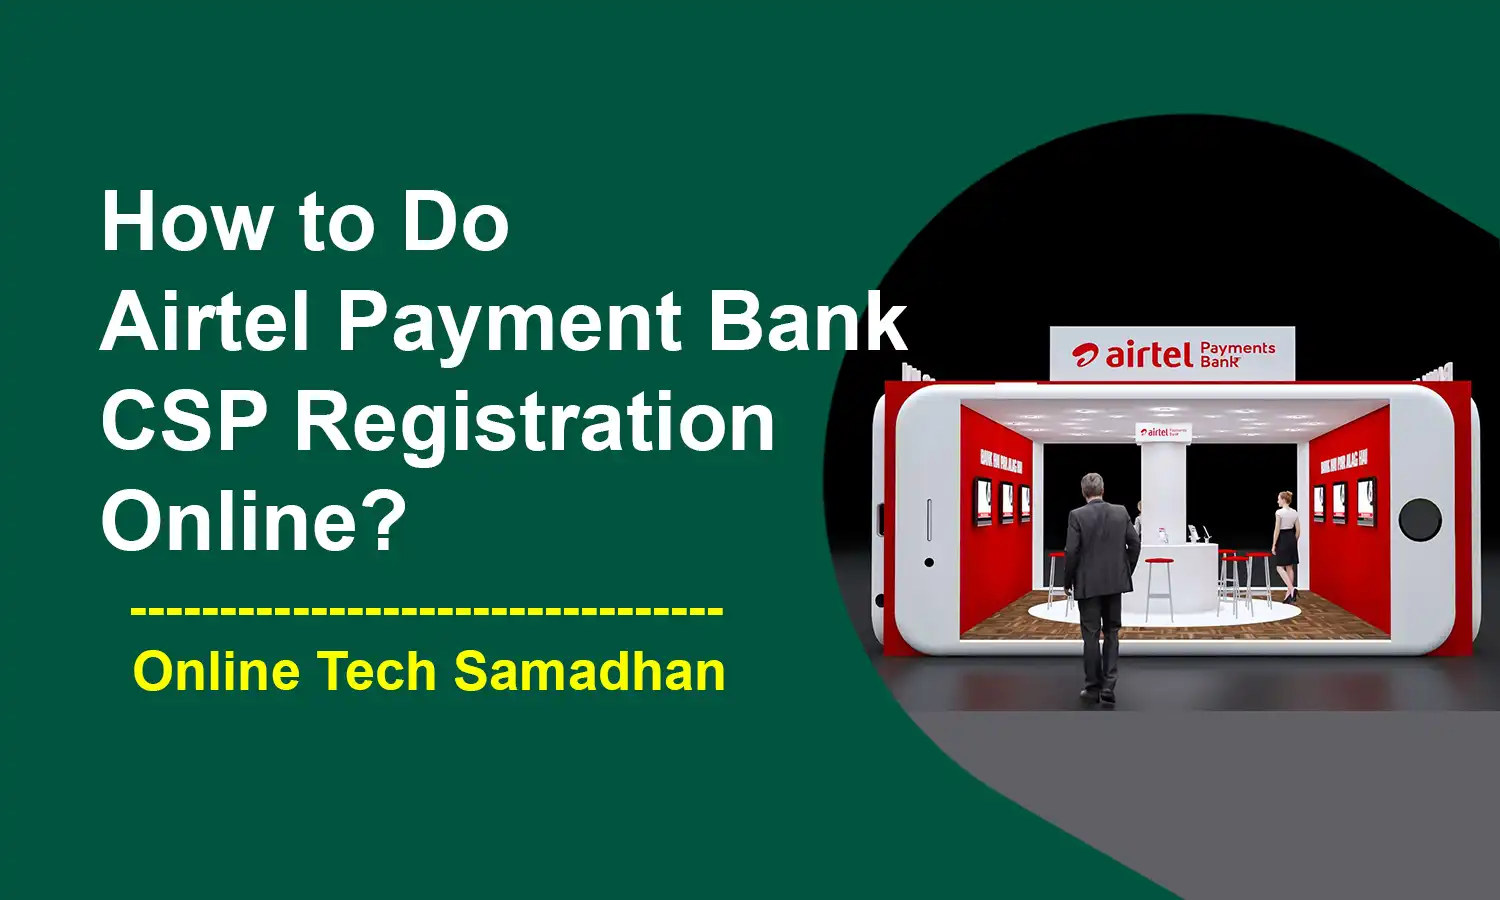 Airtel Payment Bank CSP Registration Online